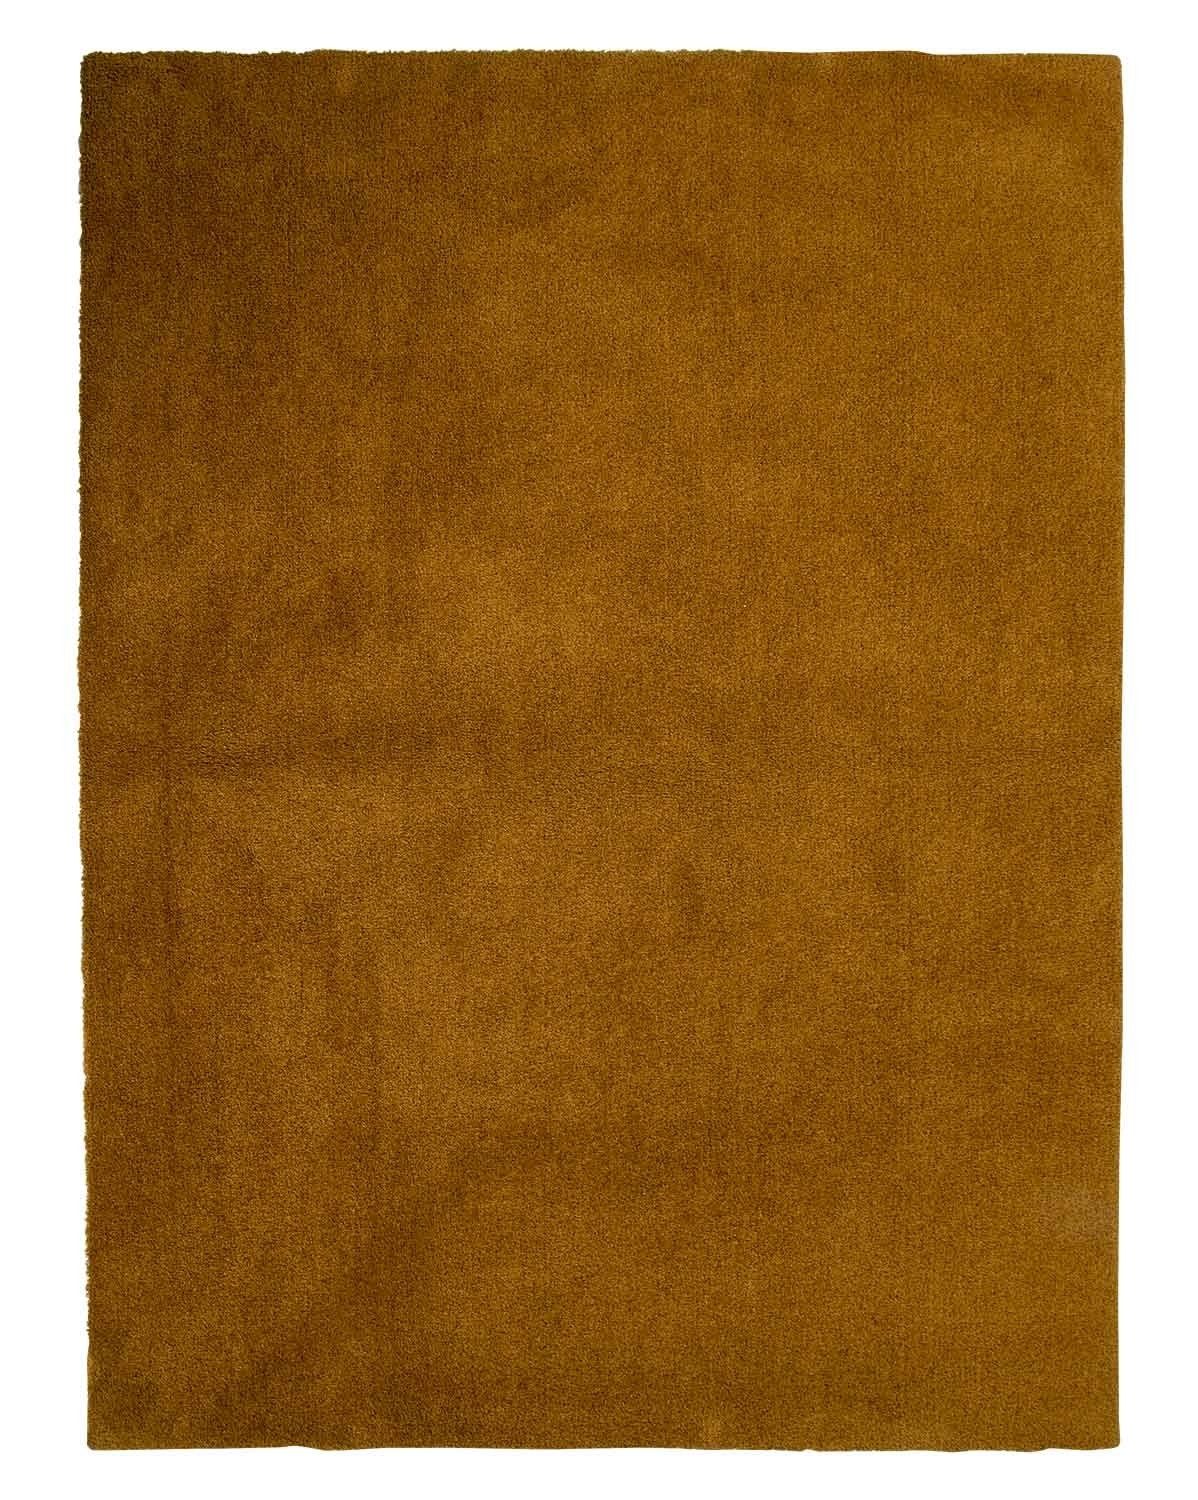 Teppich FEEL COSY, Polyester, Senffarben, 160 x 230 cm, Balta Rugs, rechteckig, Höhe: 11 mm